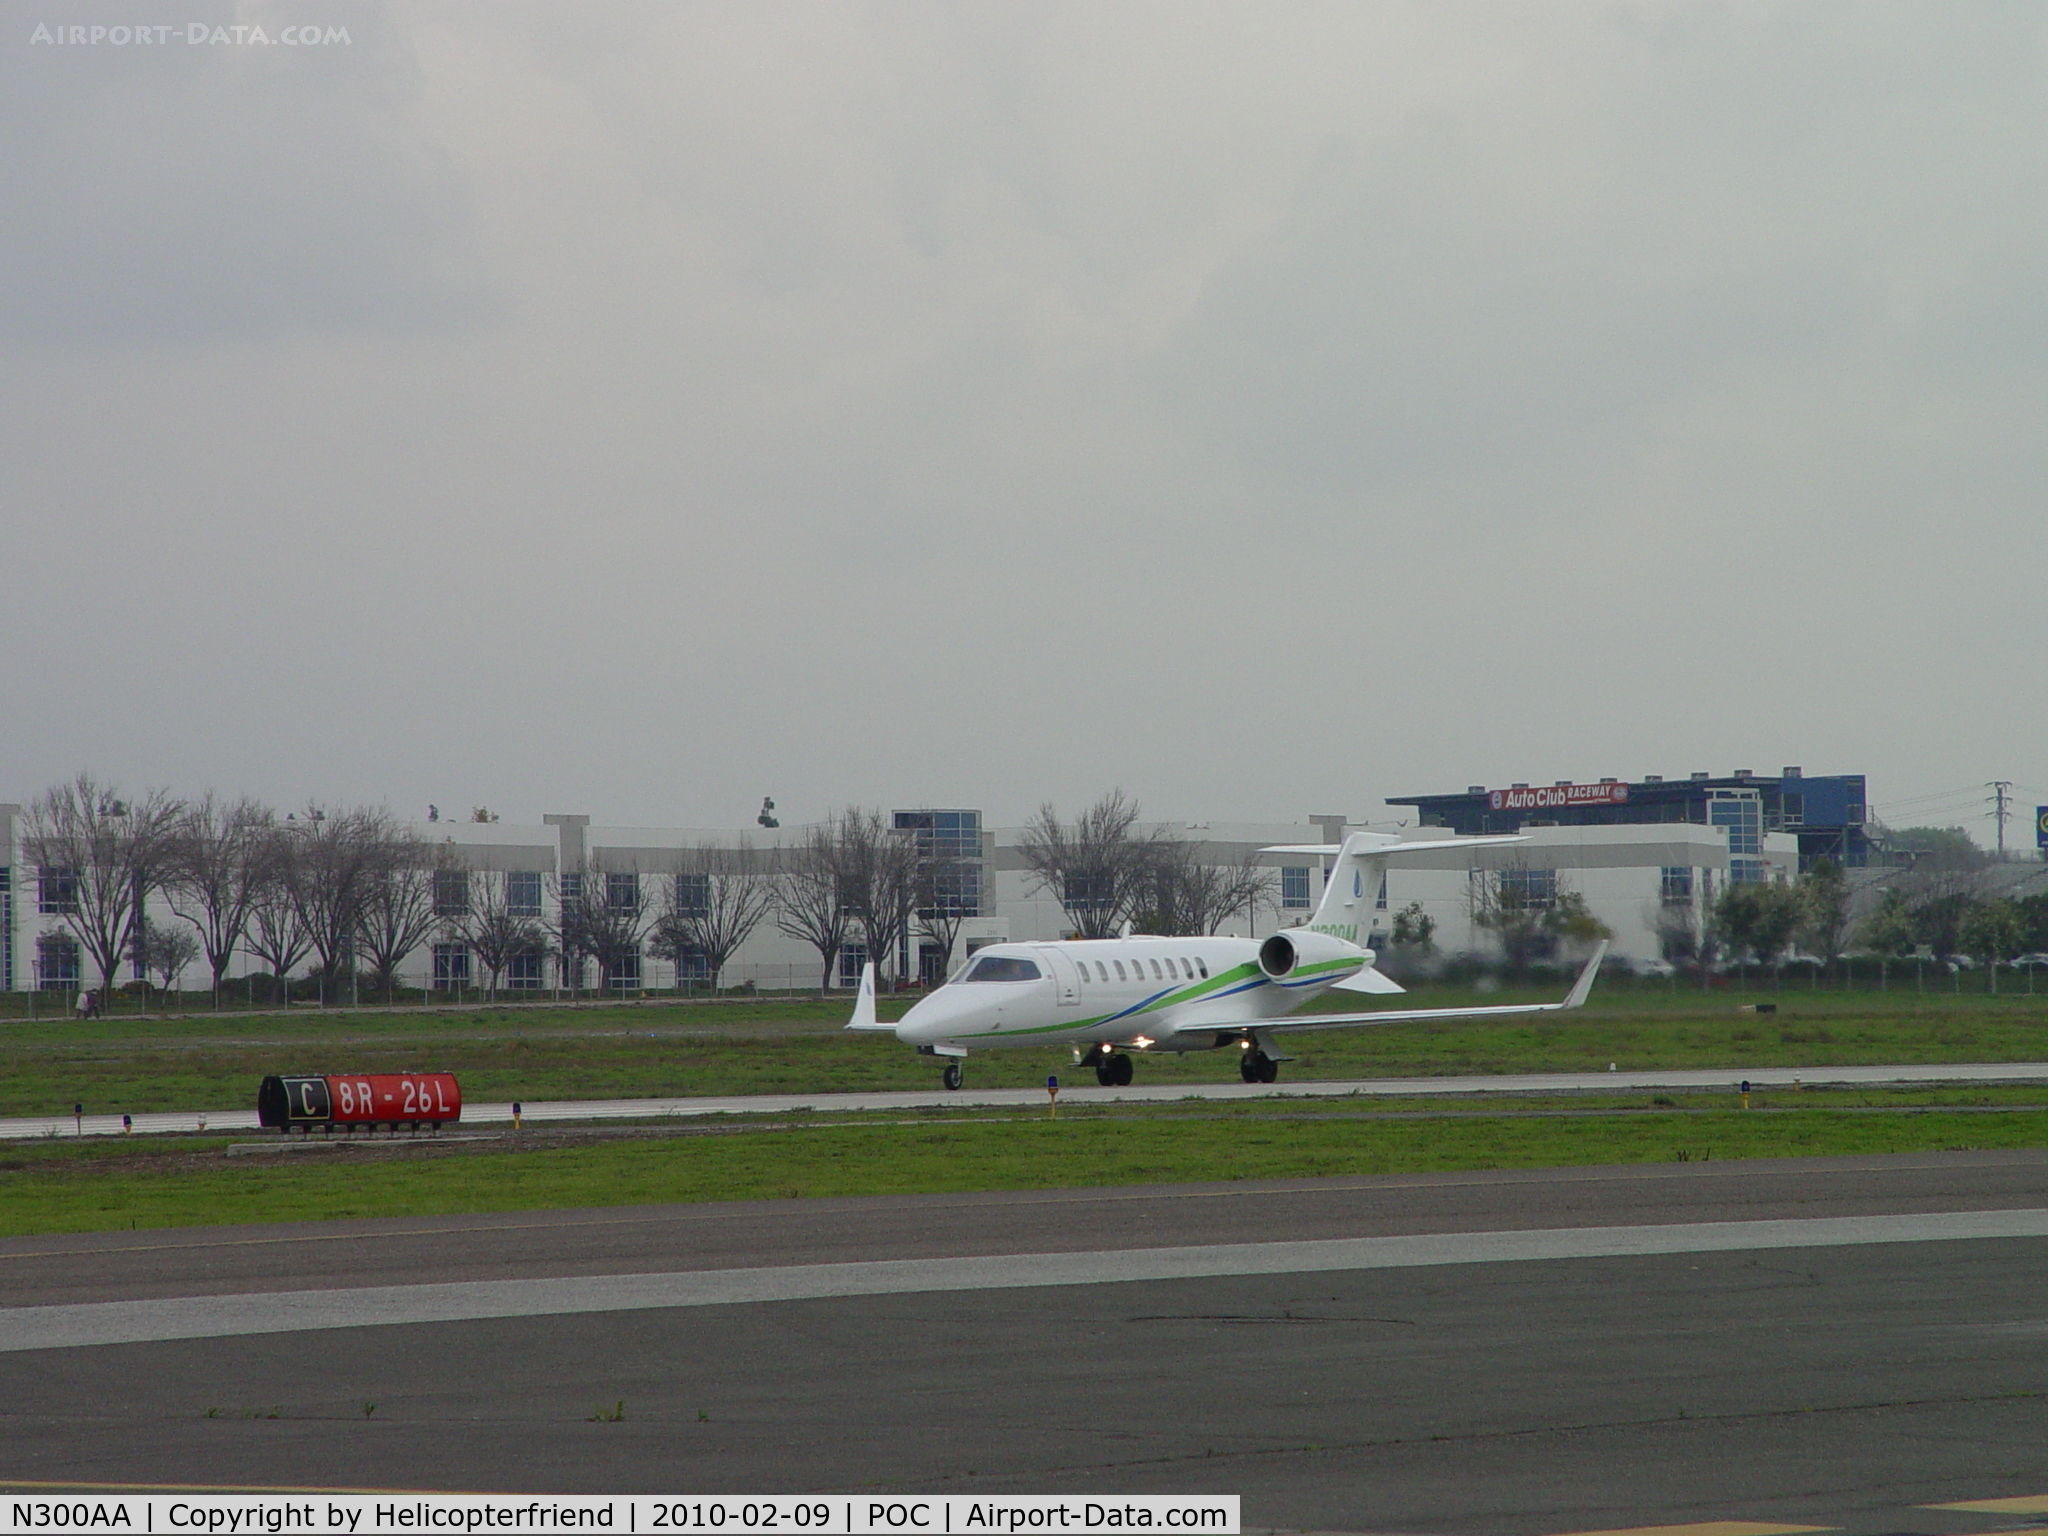 N300AA, 2005 Learjet 45 C/N 45-285, Rolling westbound on runway 26L preparing for liftoff